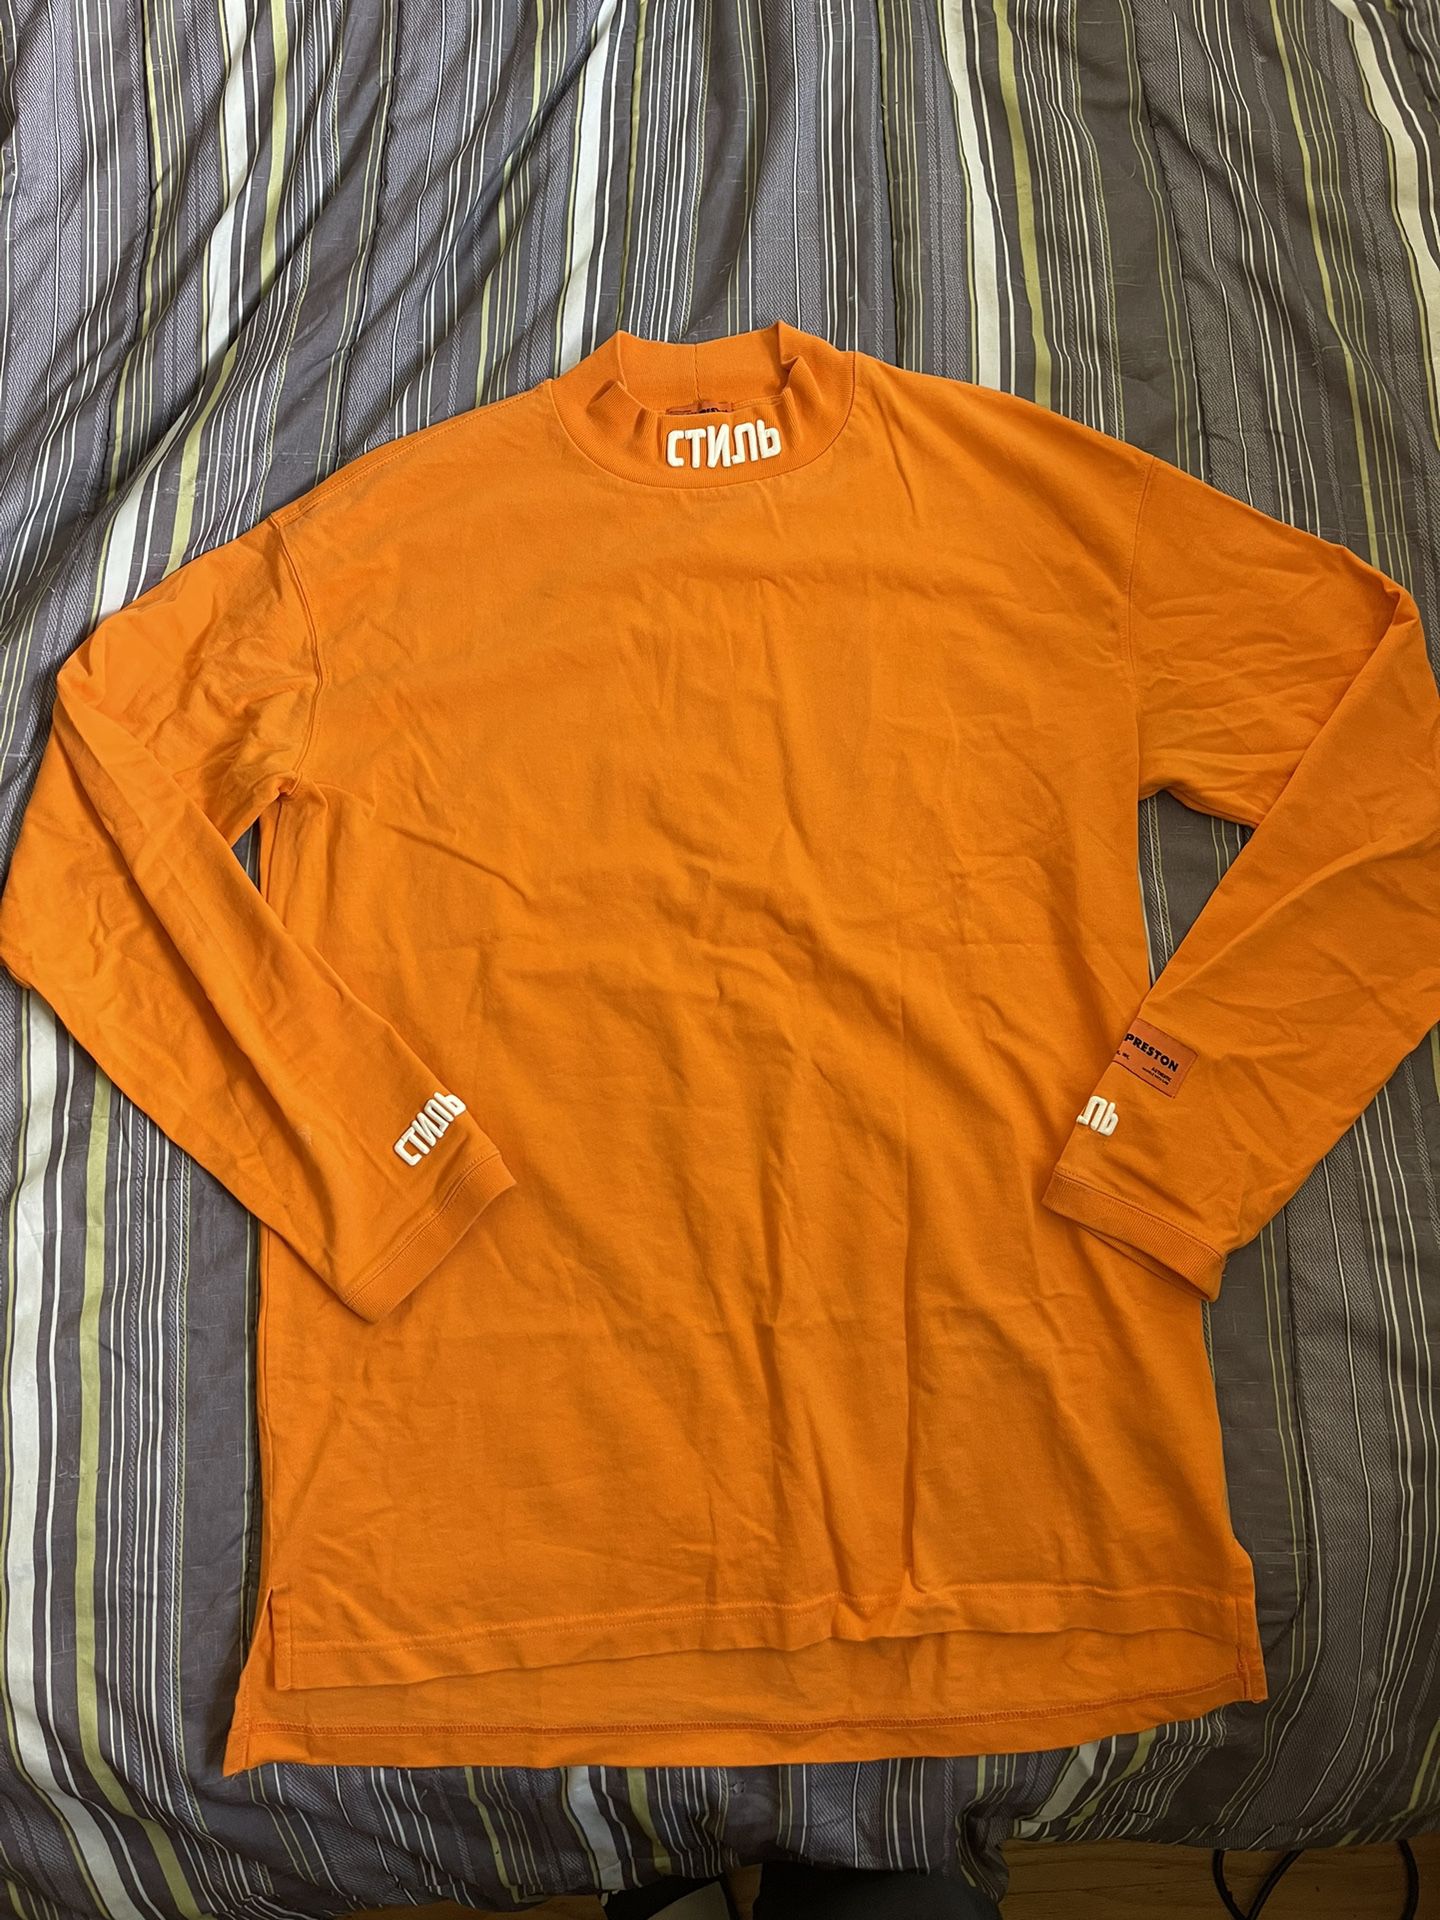 Heron Preston Orange Crewneck Long Sleeve Shirt Size M Medium